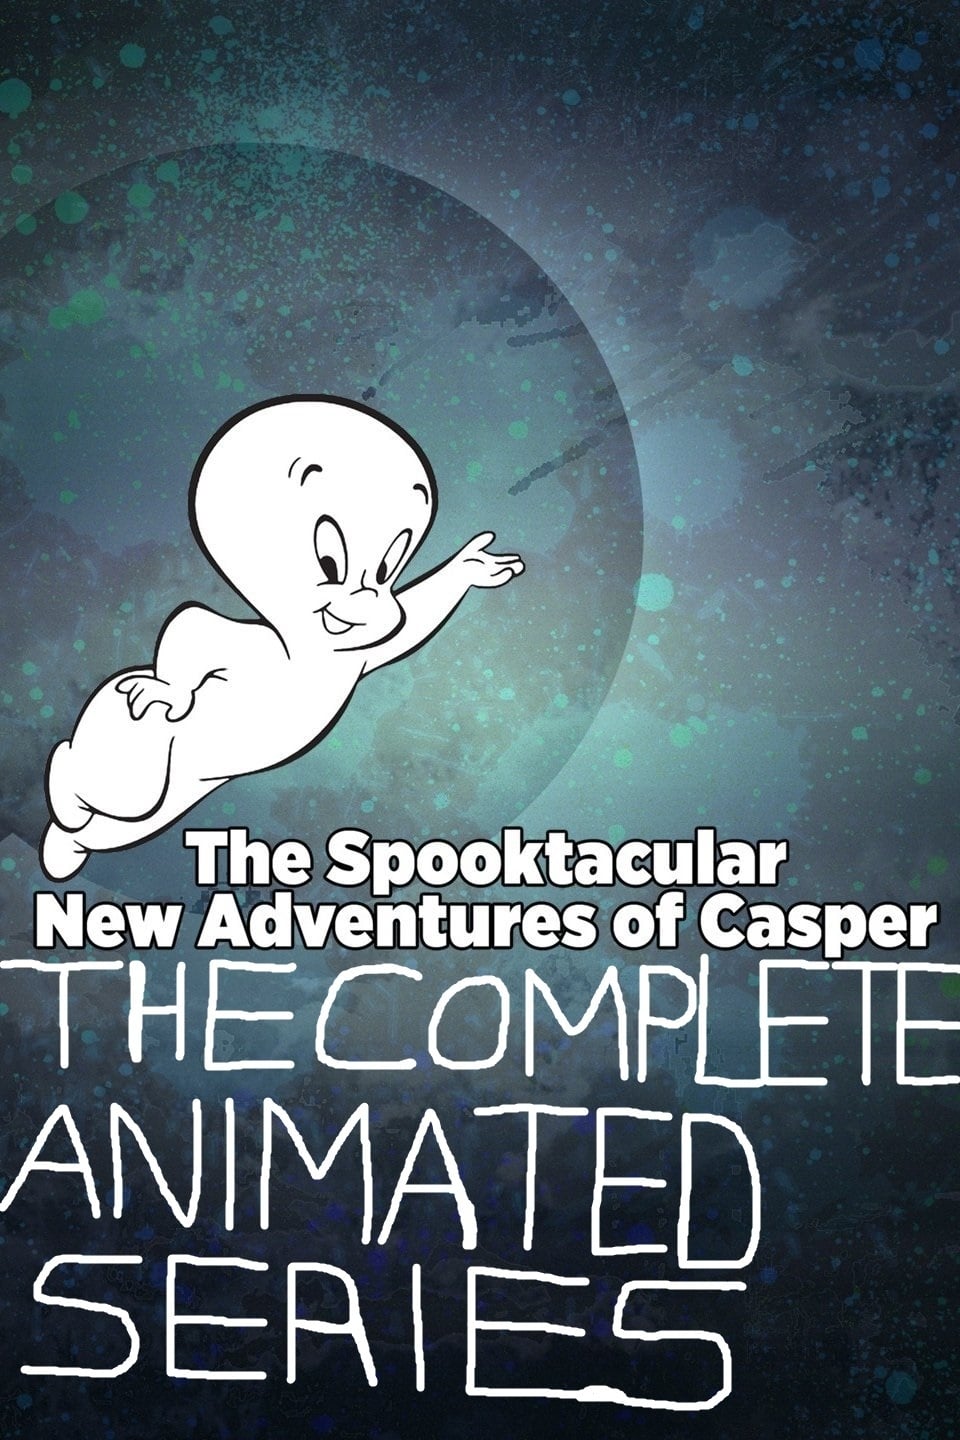 The Spooktacular New Adventures of Casper Picture